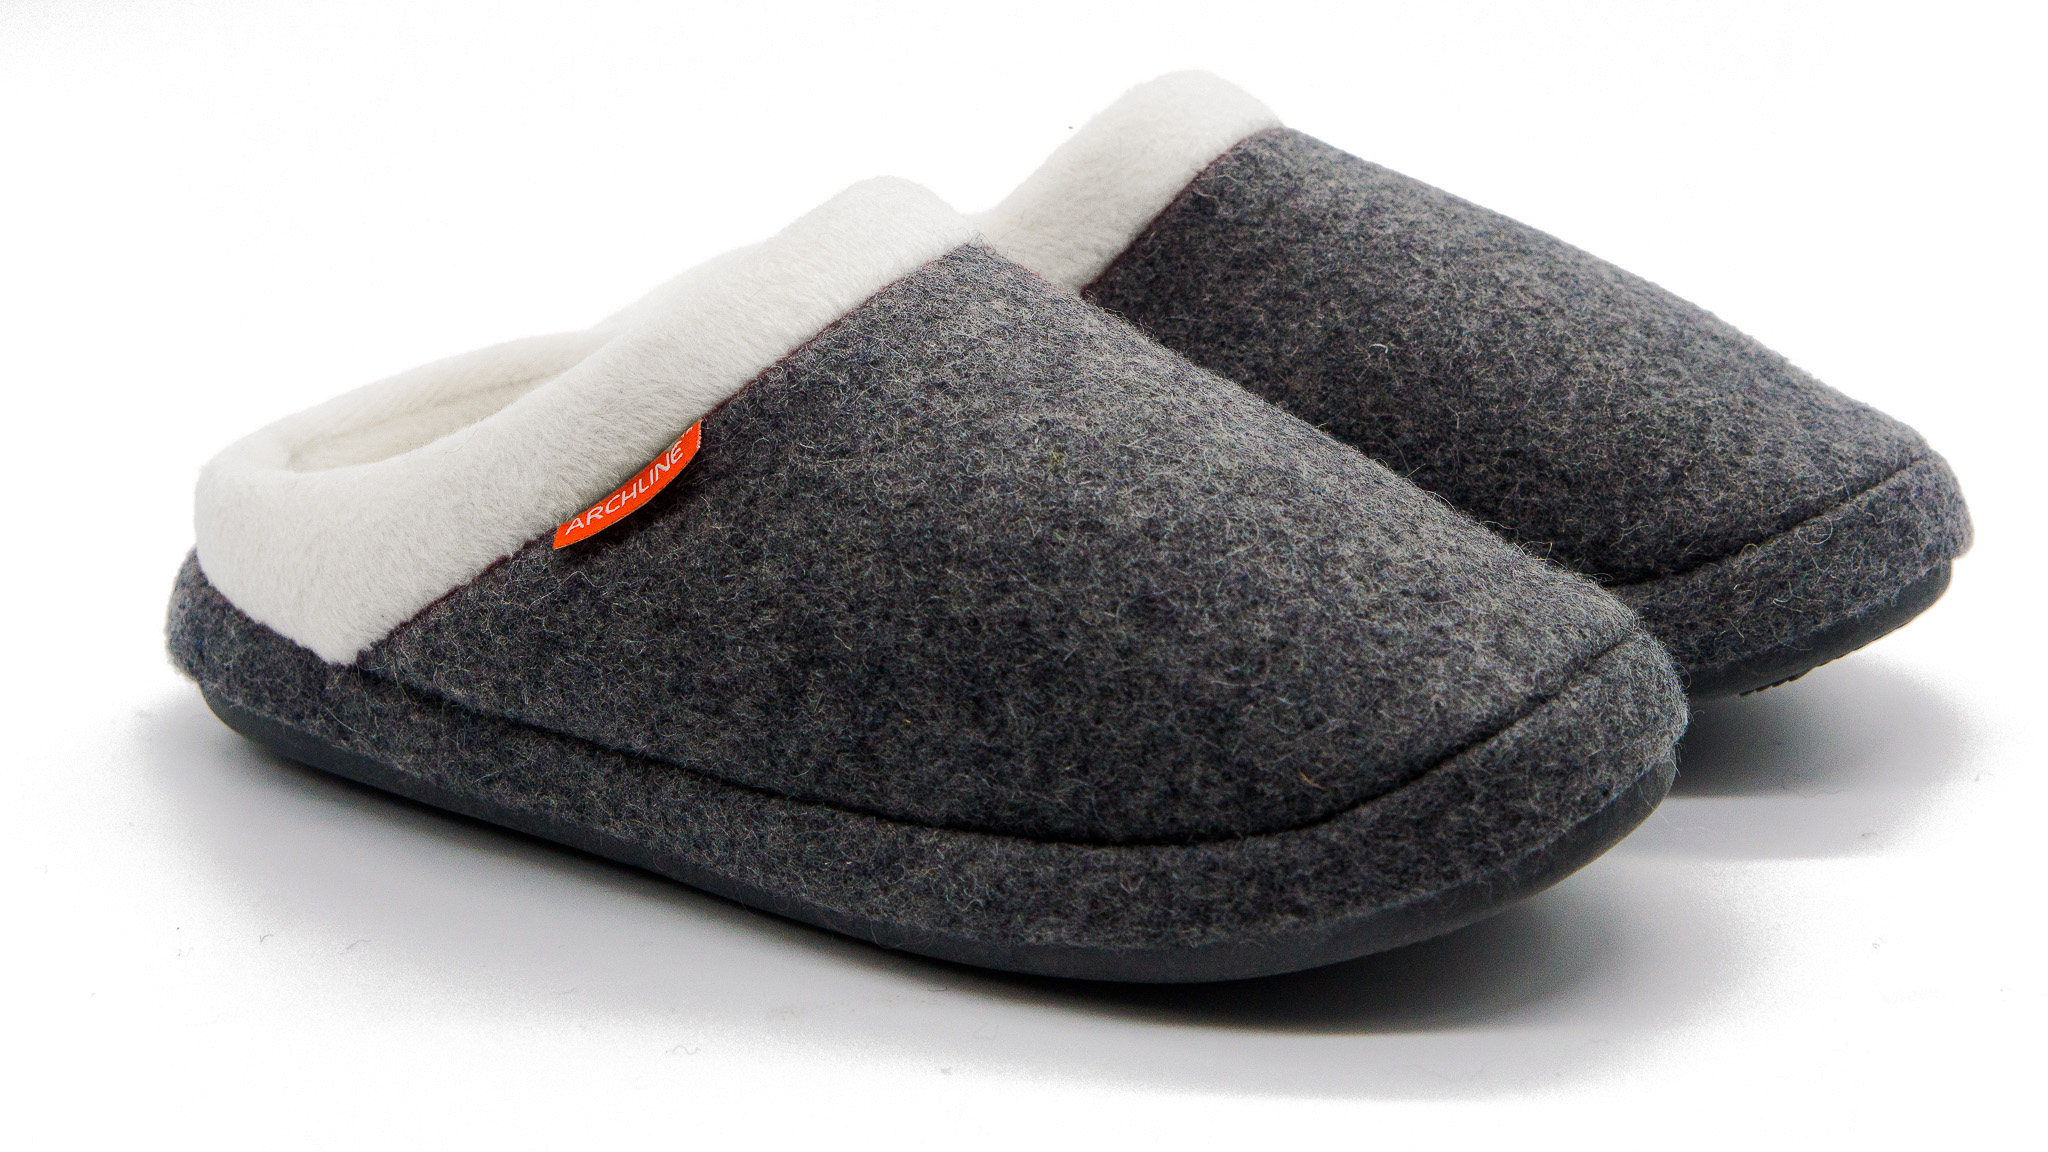 orthotic slippers australia